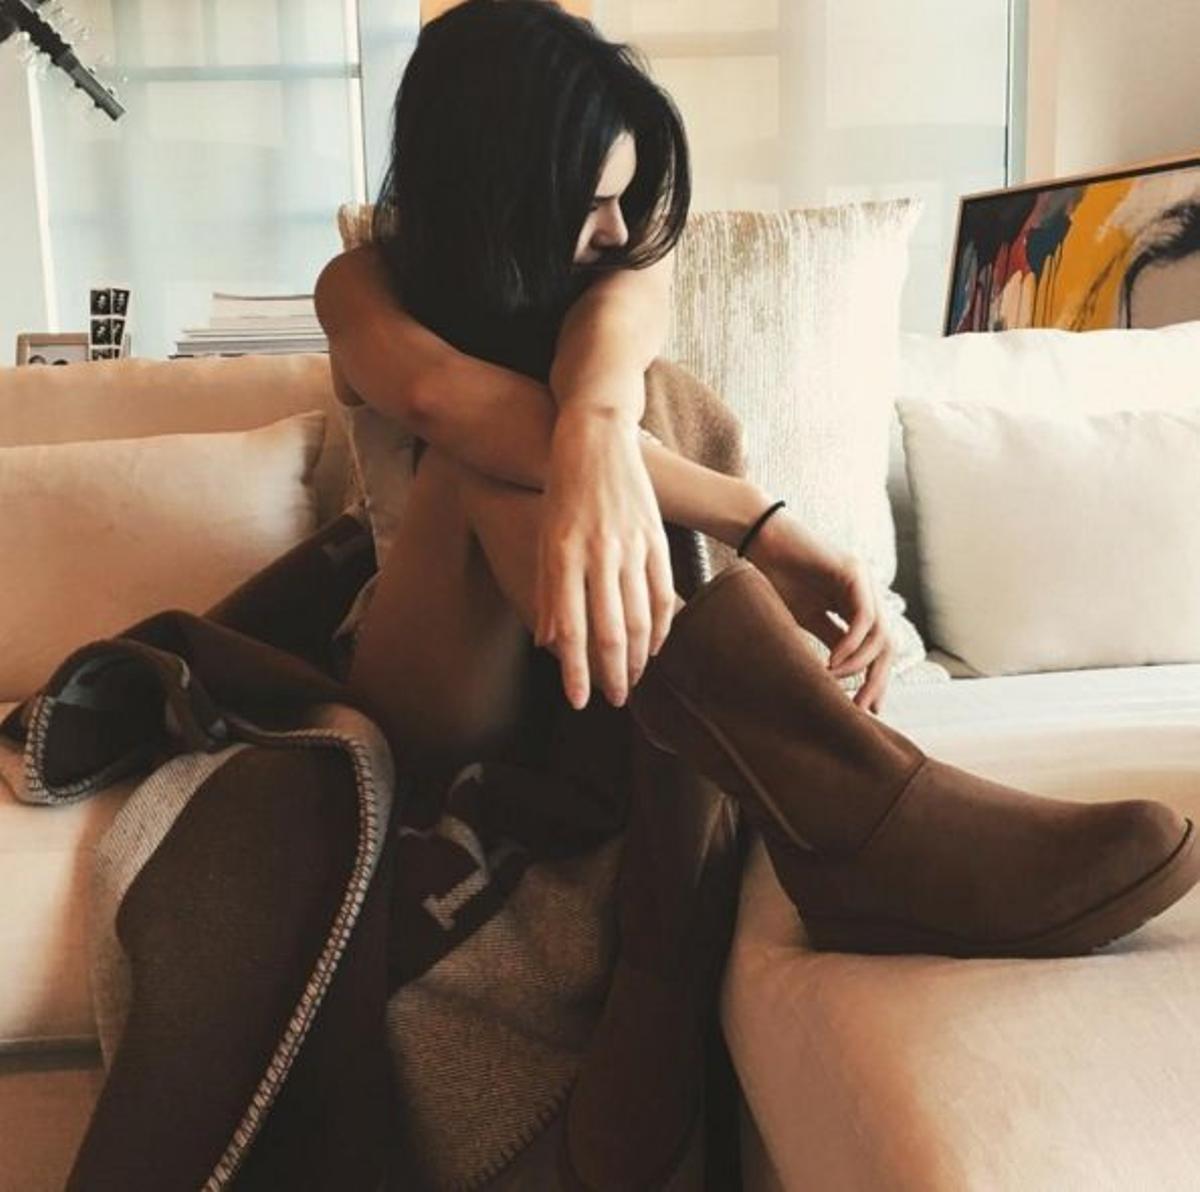 La 'mano de dino' de Kendall Jenner